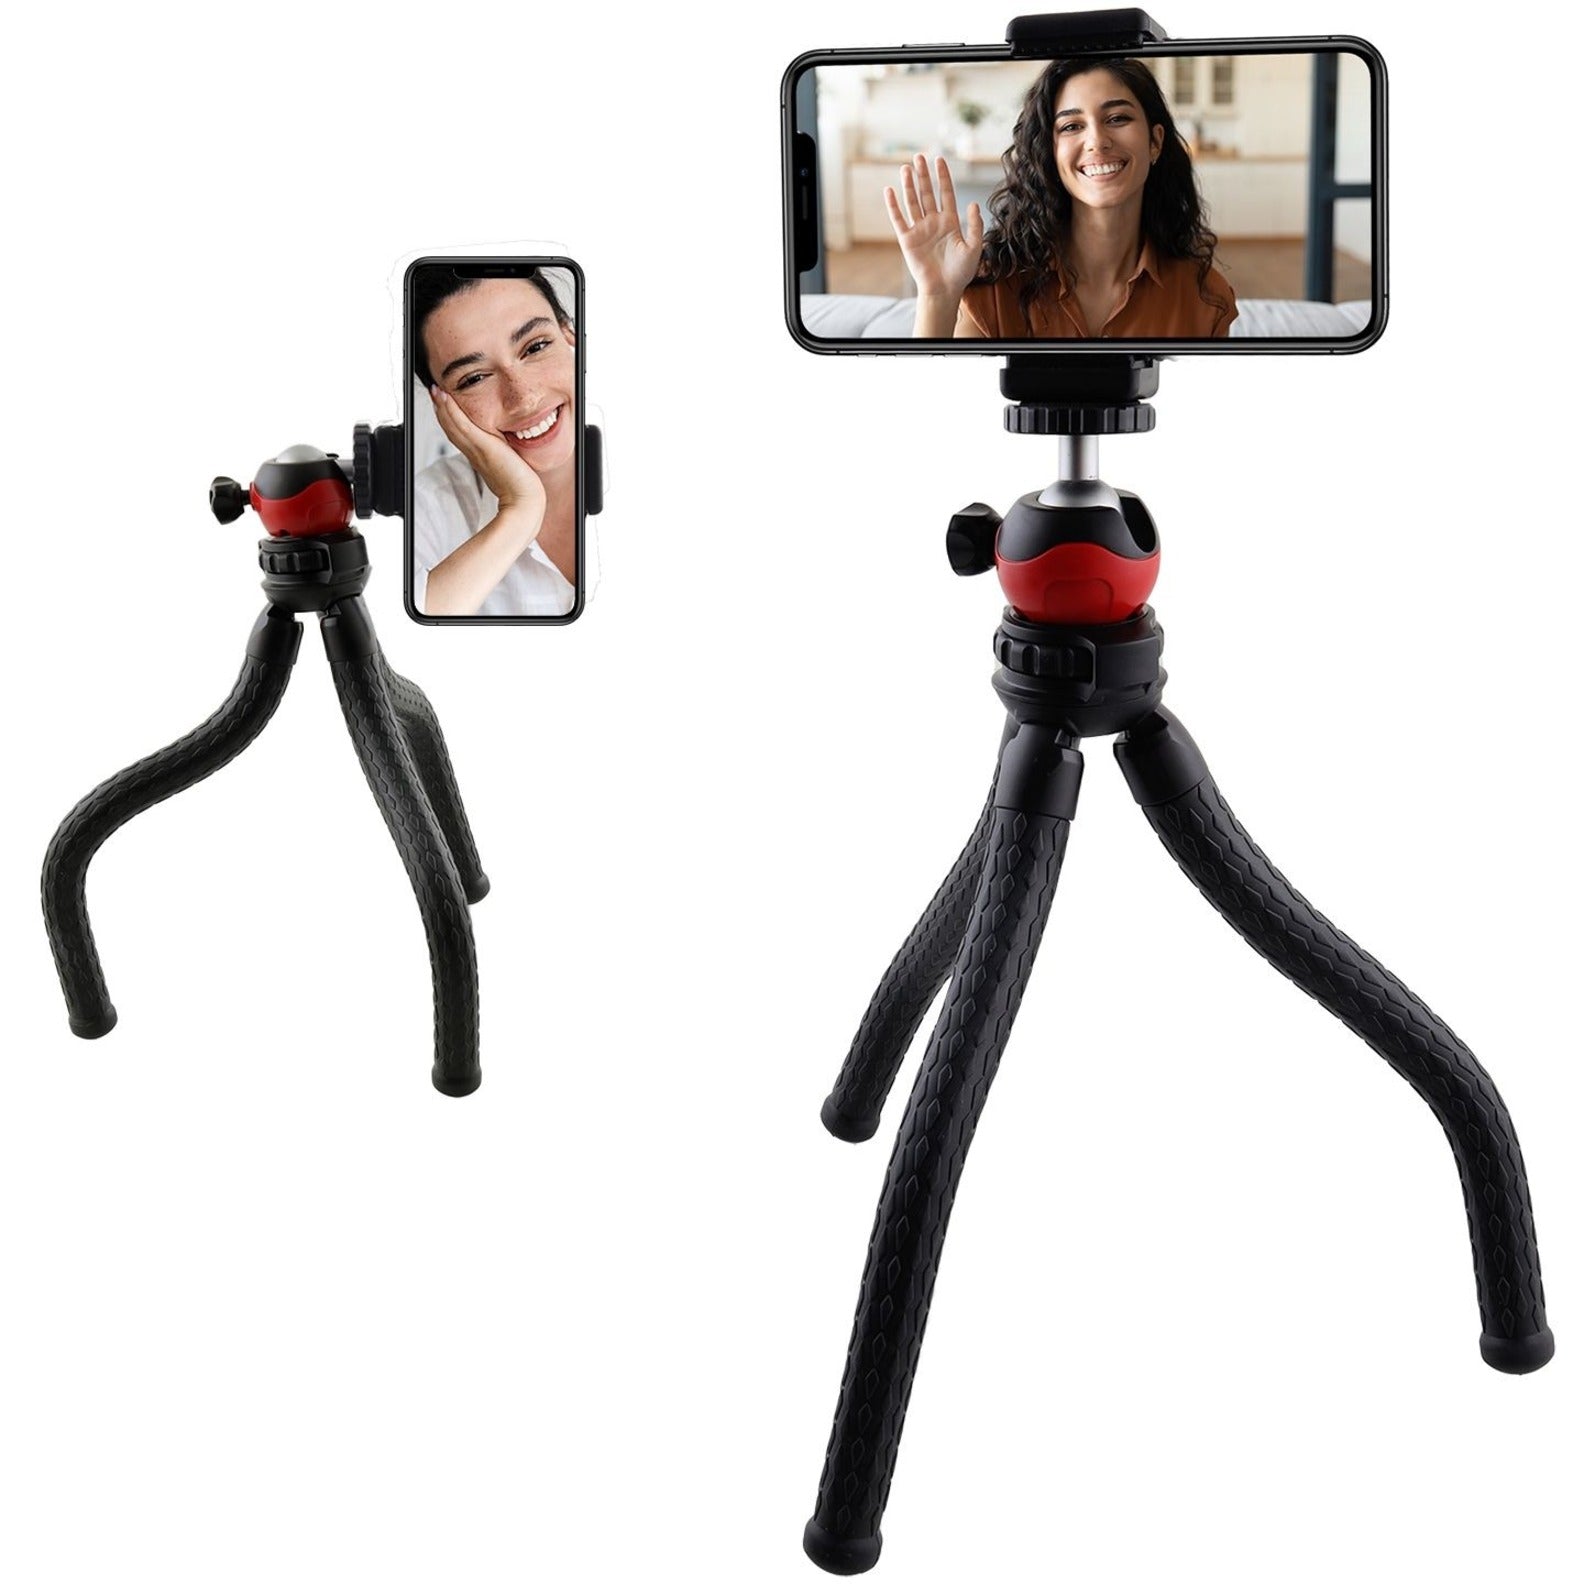 CODi A01450 12" Flexible Desktop Tripod, Compact and Versatile Tripod for Cameras, Webcams, Phones, and GoPros